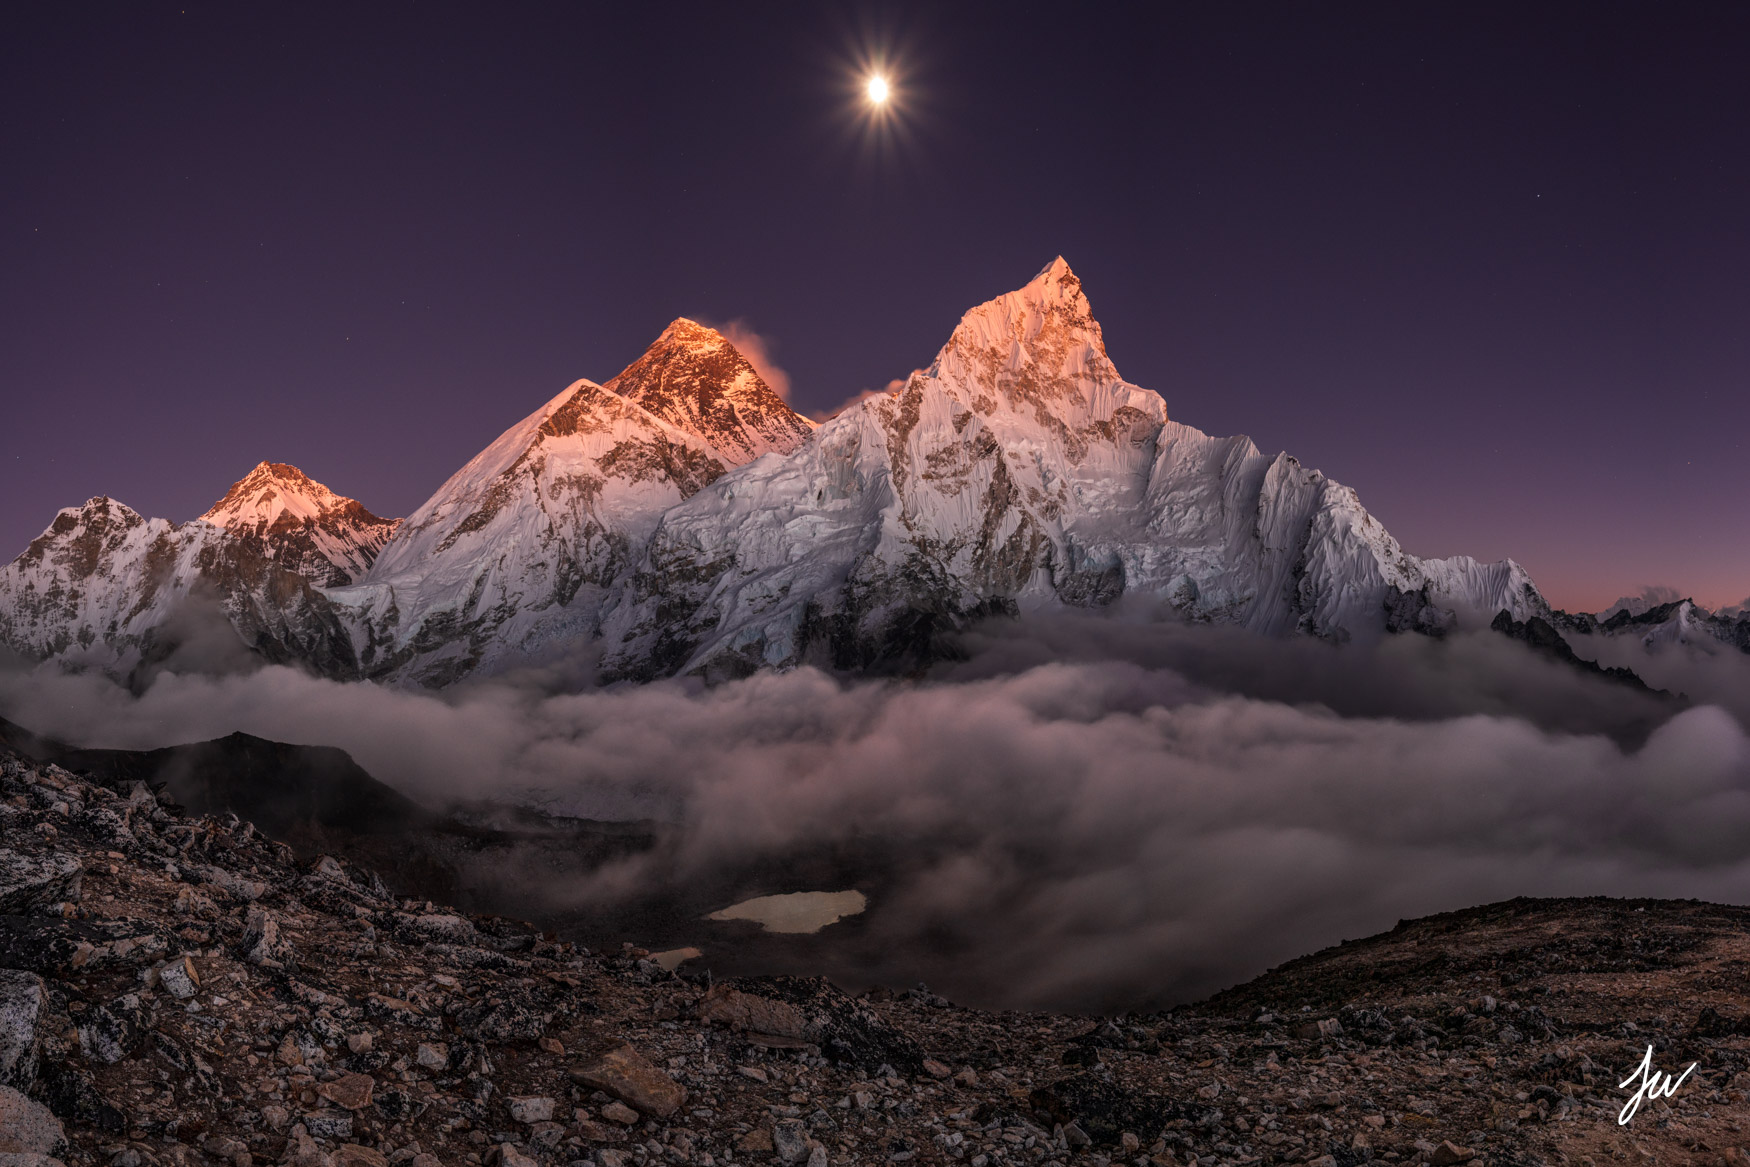 Kala Patthar alpenglow on Everest in the Khumbu.